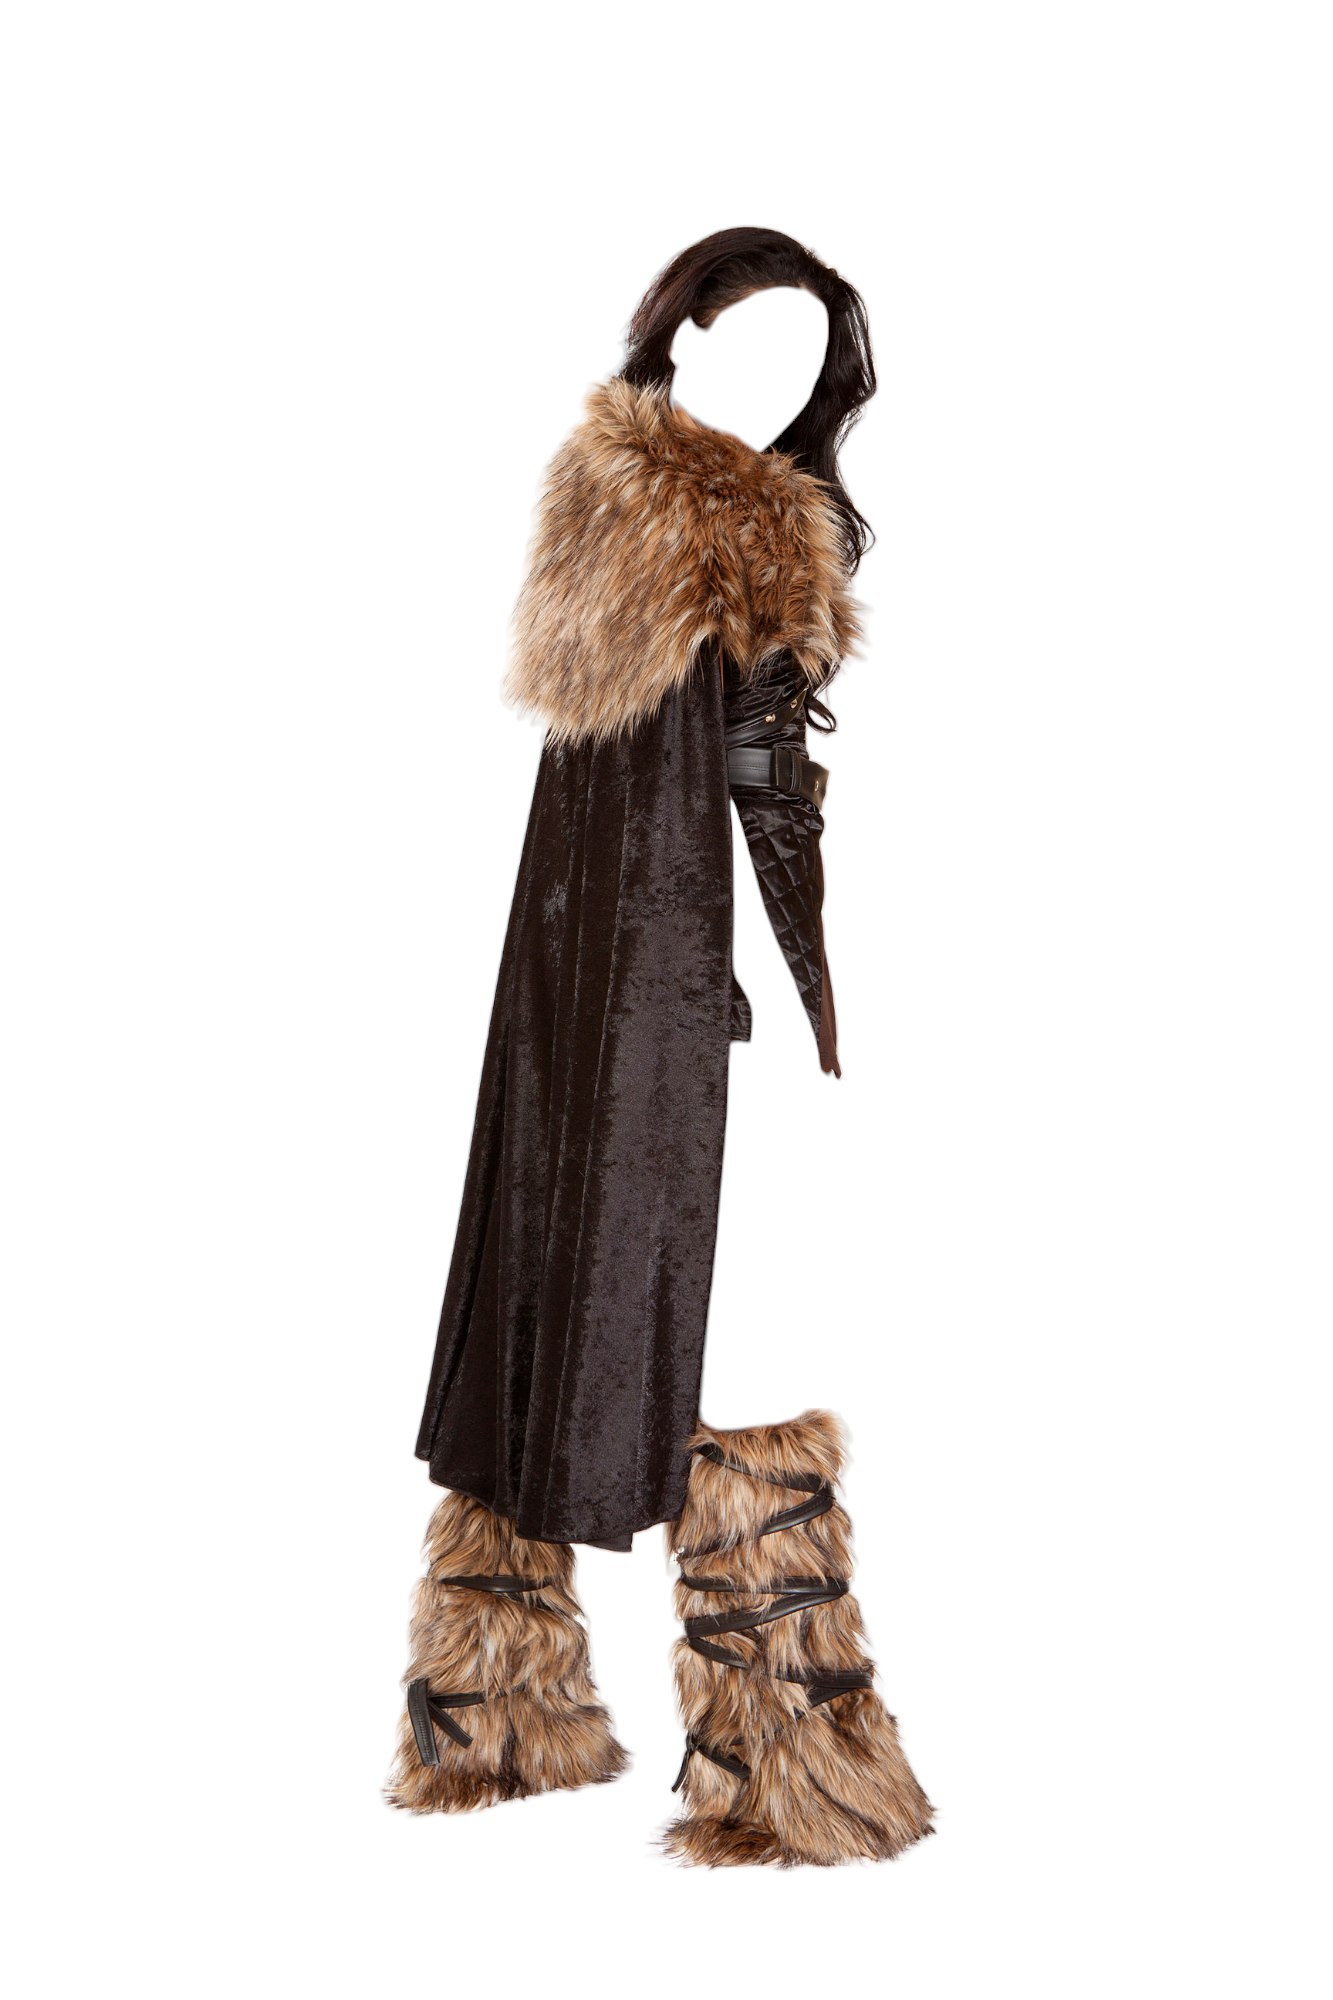 Roma Costume 4 PC Northern Warrior Front Slit Dress with Velvet Shorts Costume Set Black/Brown